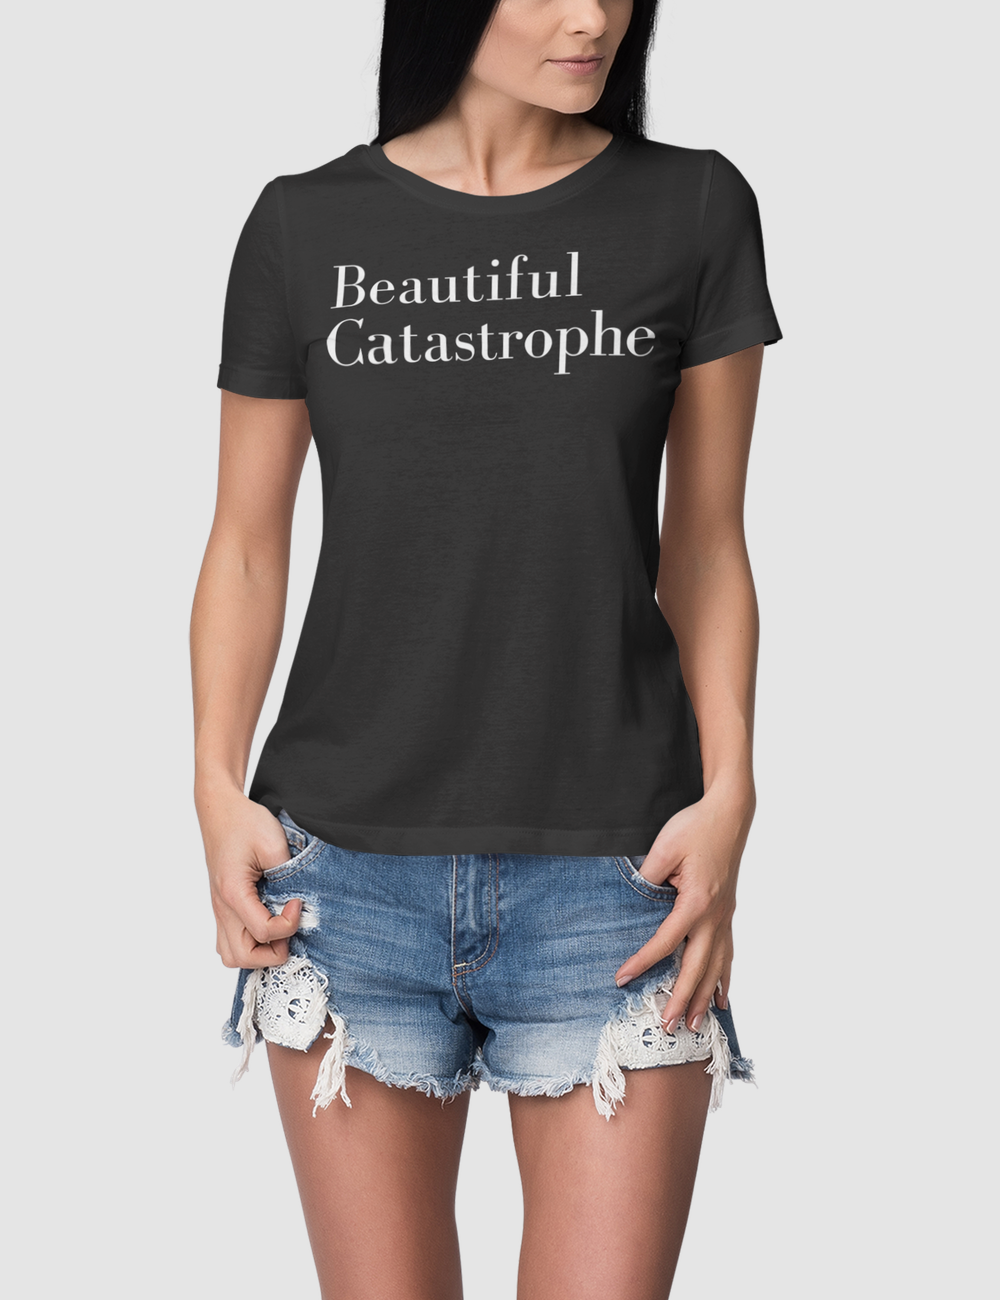 Beautiful Catastrophe | Women's Fitted T-Shirt OniTakai